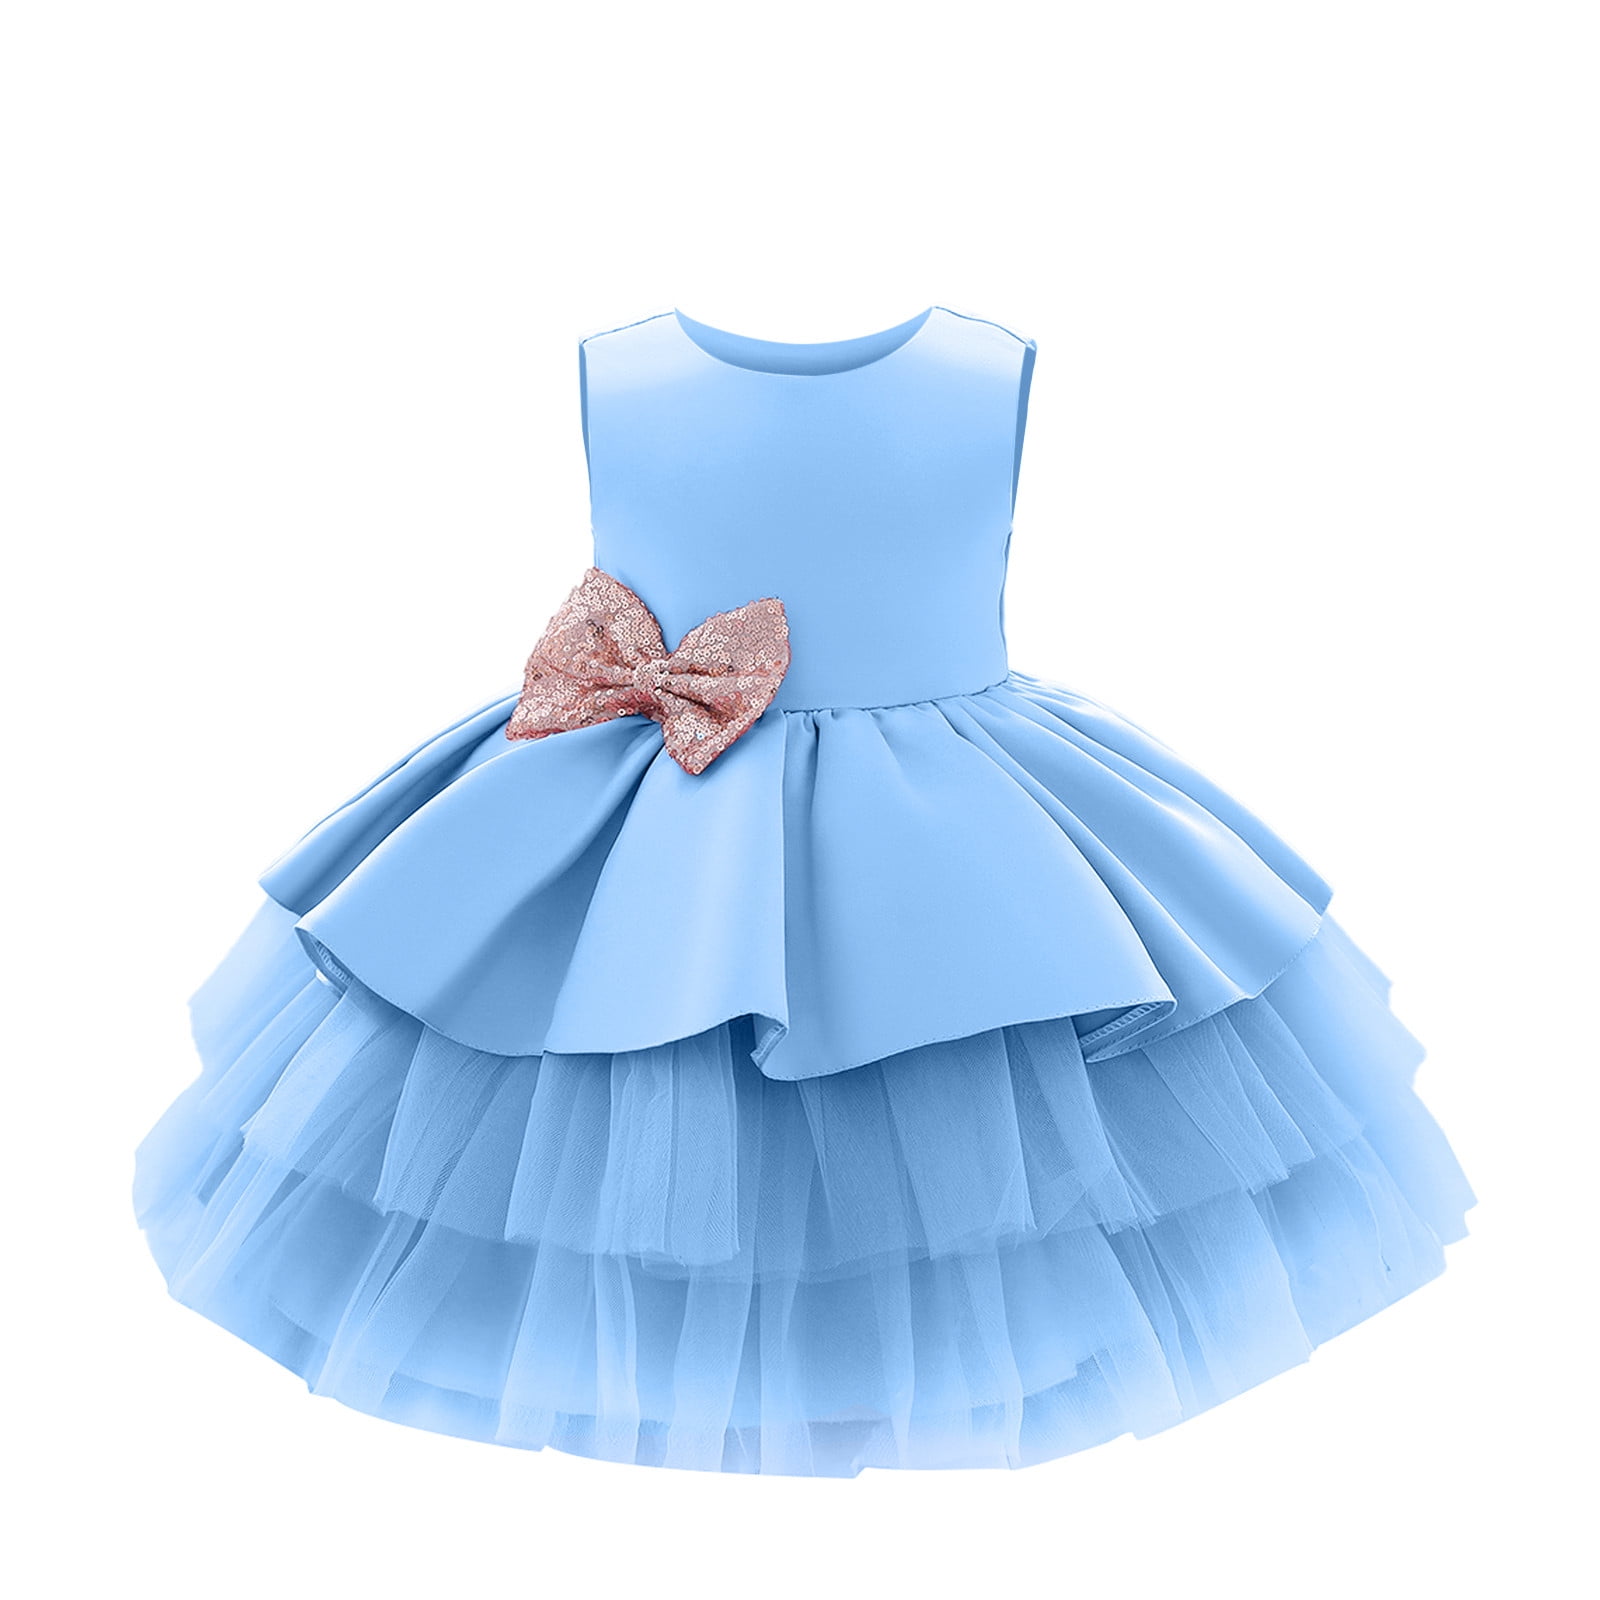 Aggregate 211+ sky blue dress for girl latest